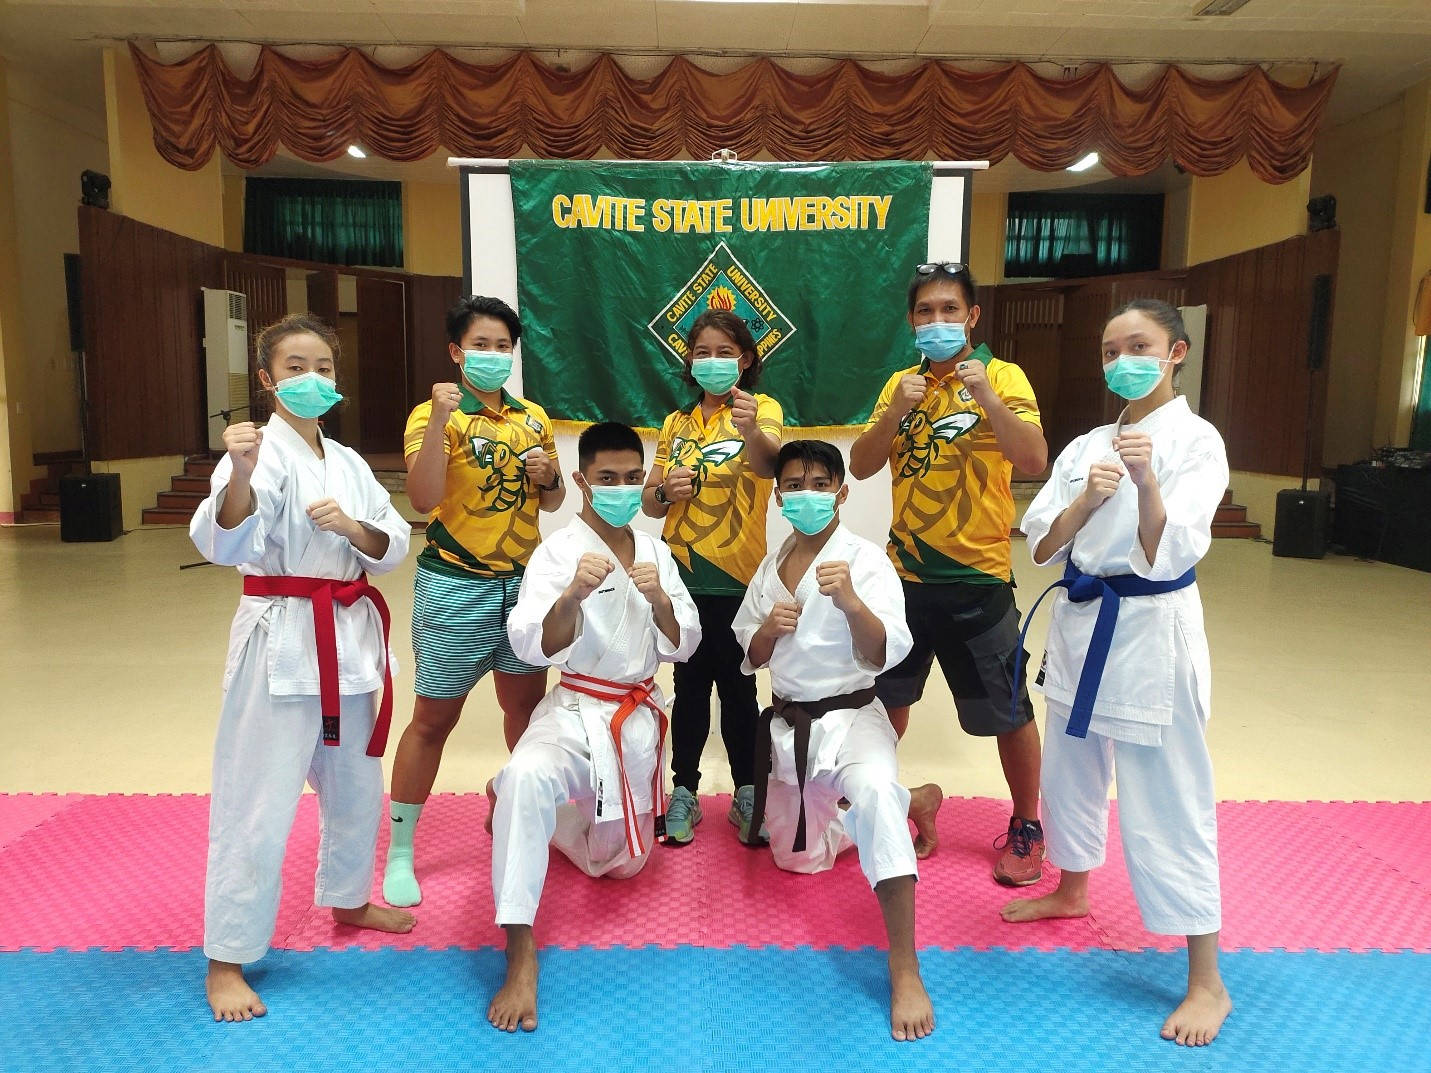 Karate Elever I Masker Cavite State University Wallpaper Wallpaper